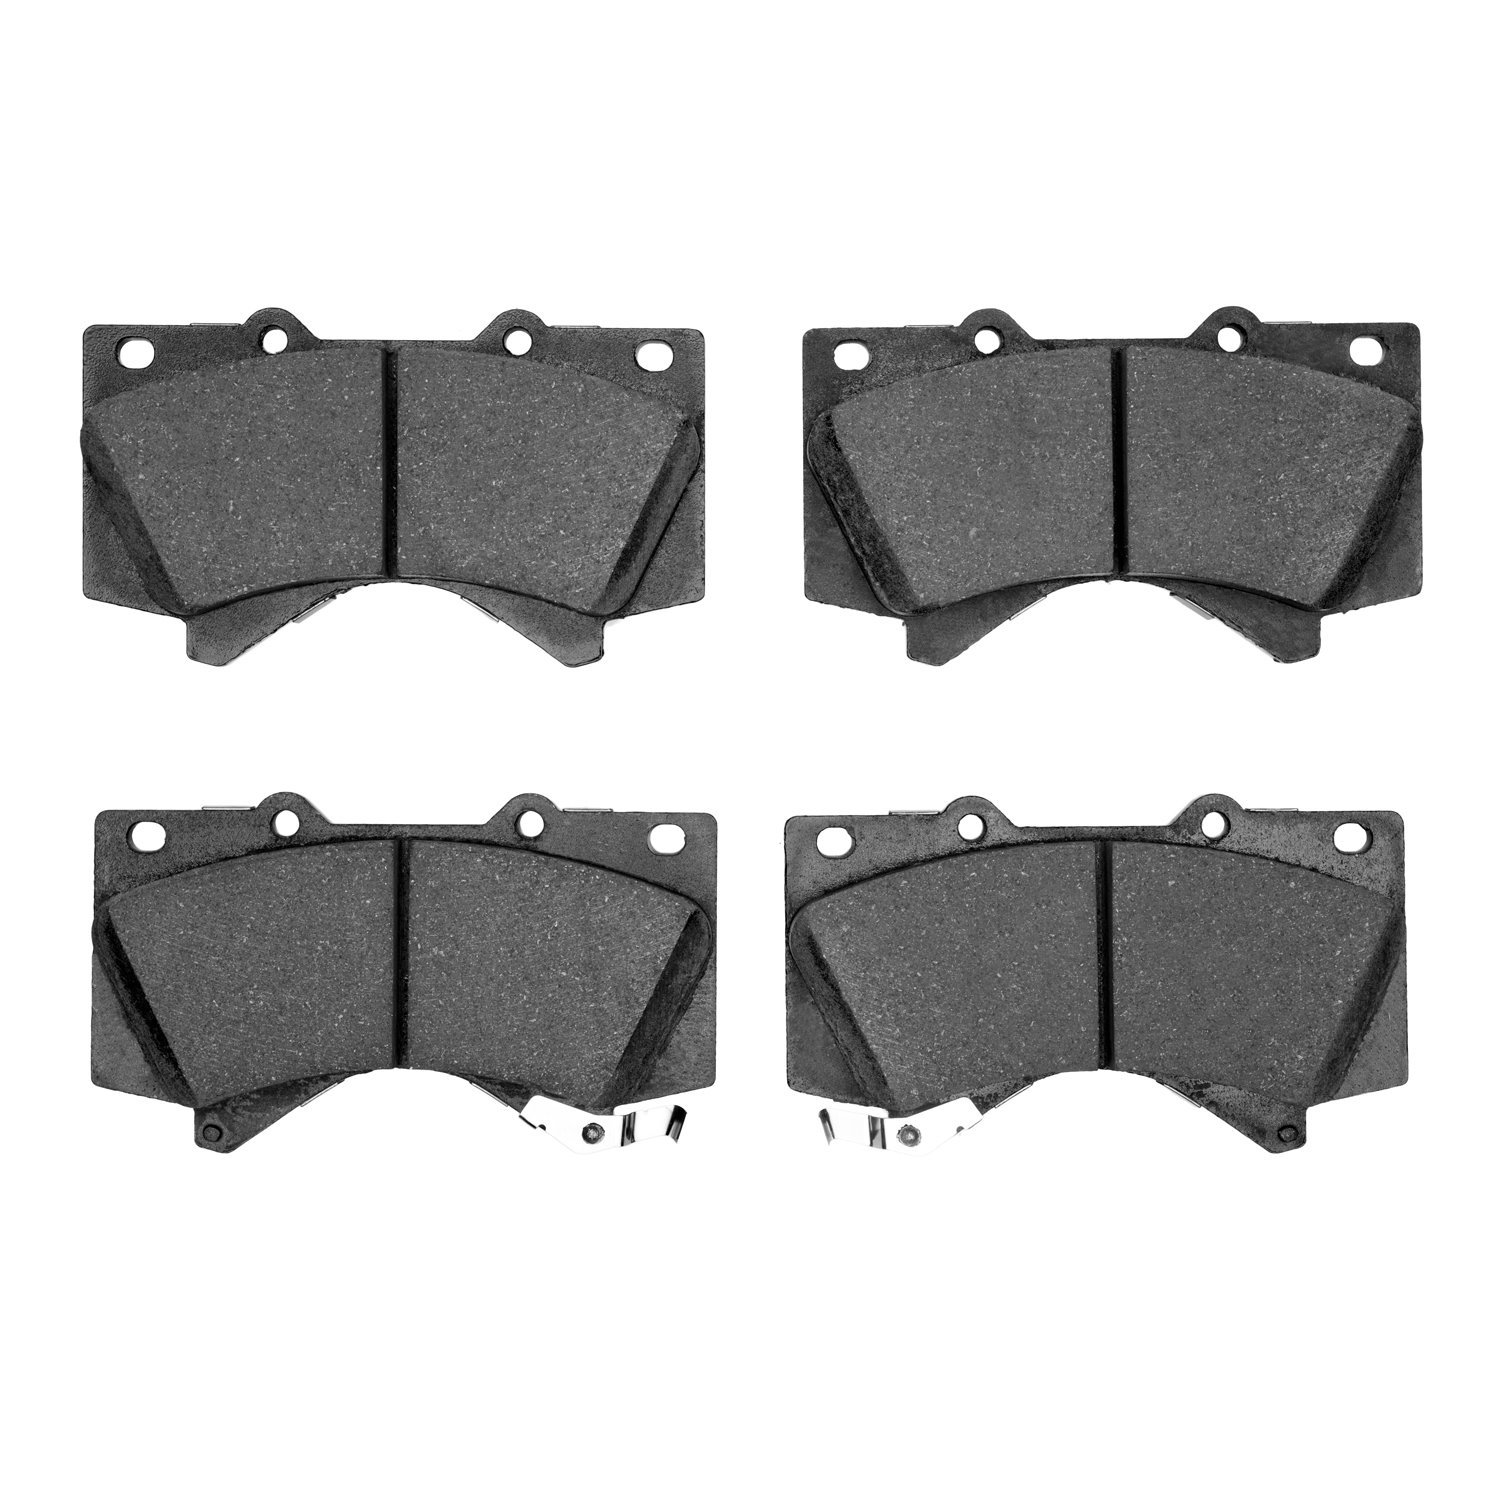 1310-1303-00 3000-Series Ceramic Brake Pads, Fits Select Lexus/Toyota/Scion, Position: Front